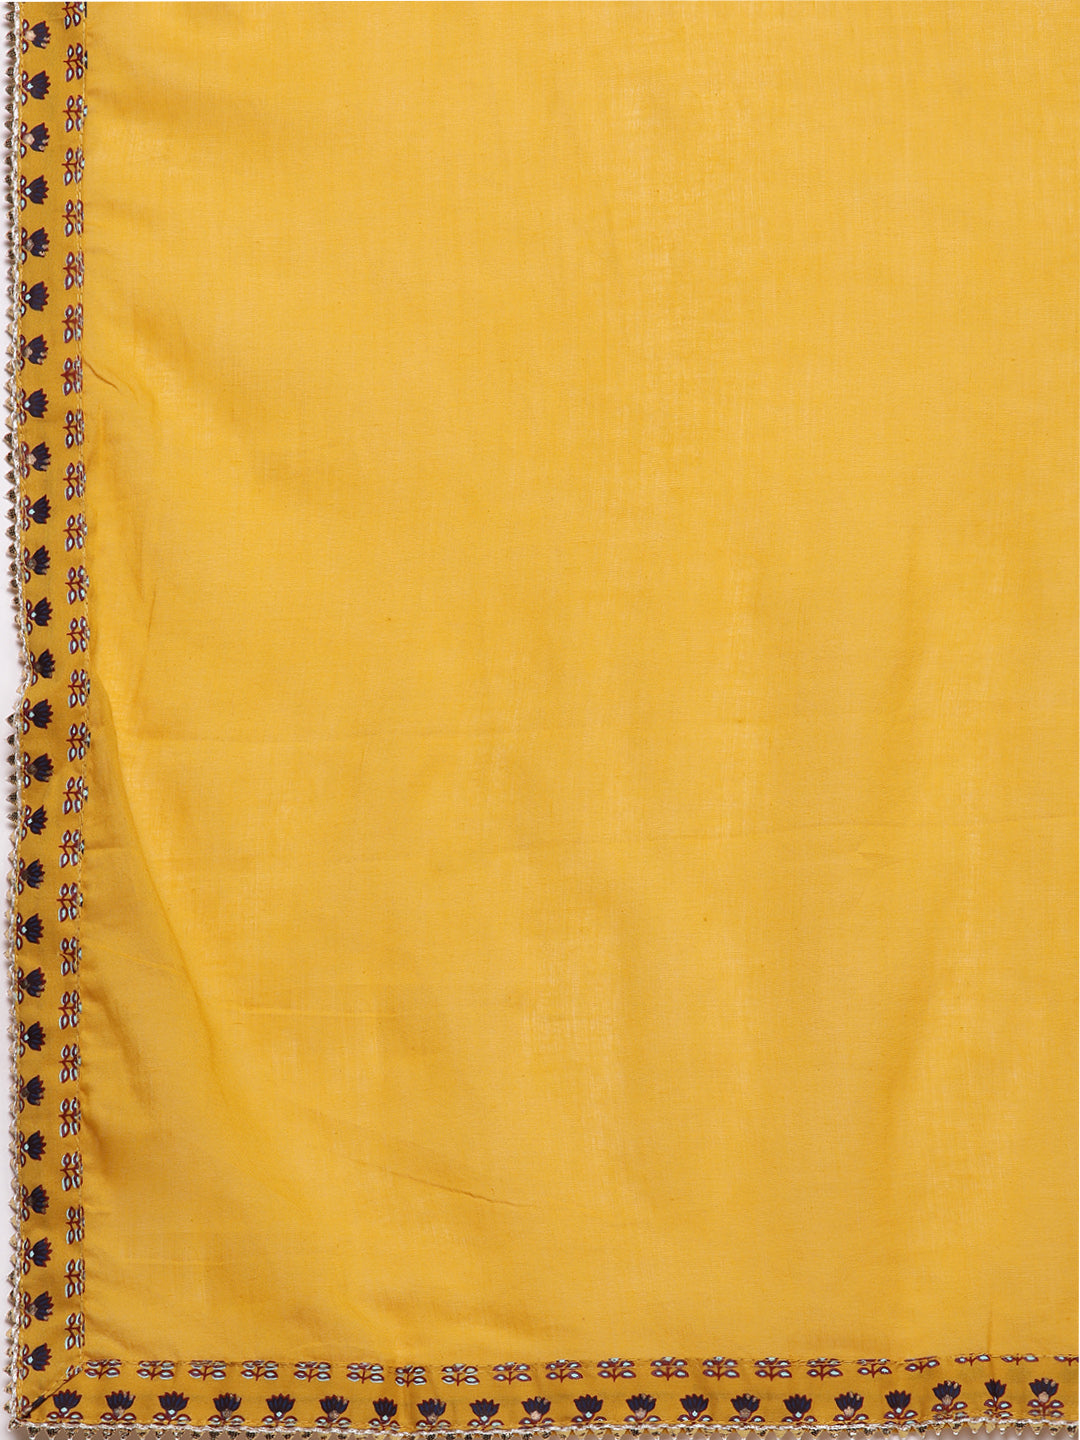 Women's Mustard Zari Embroidered Printed Kurta set with Trousers and Dupatta